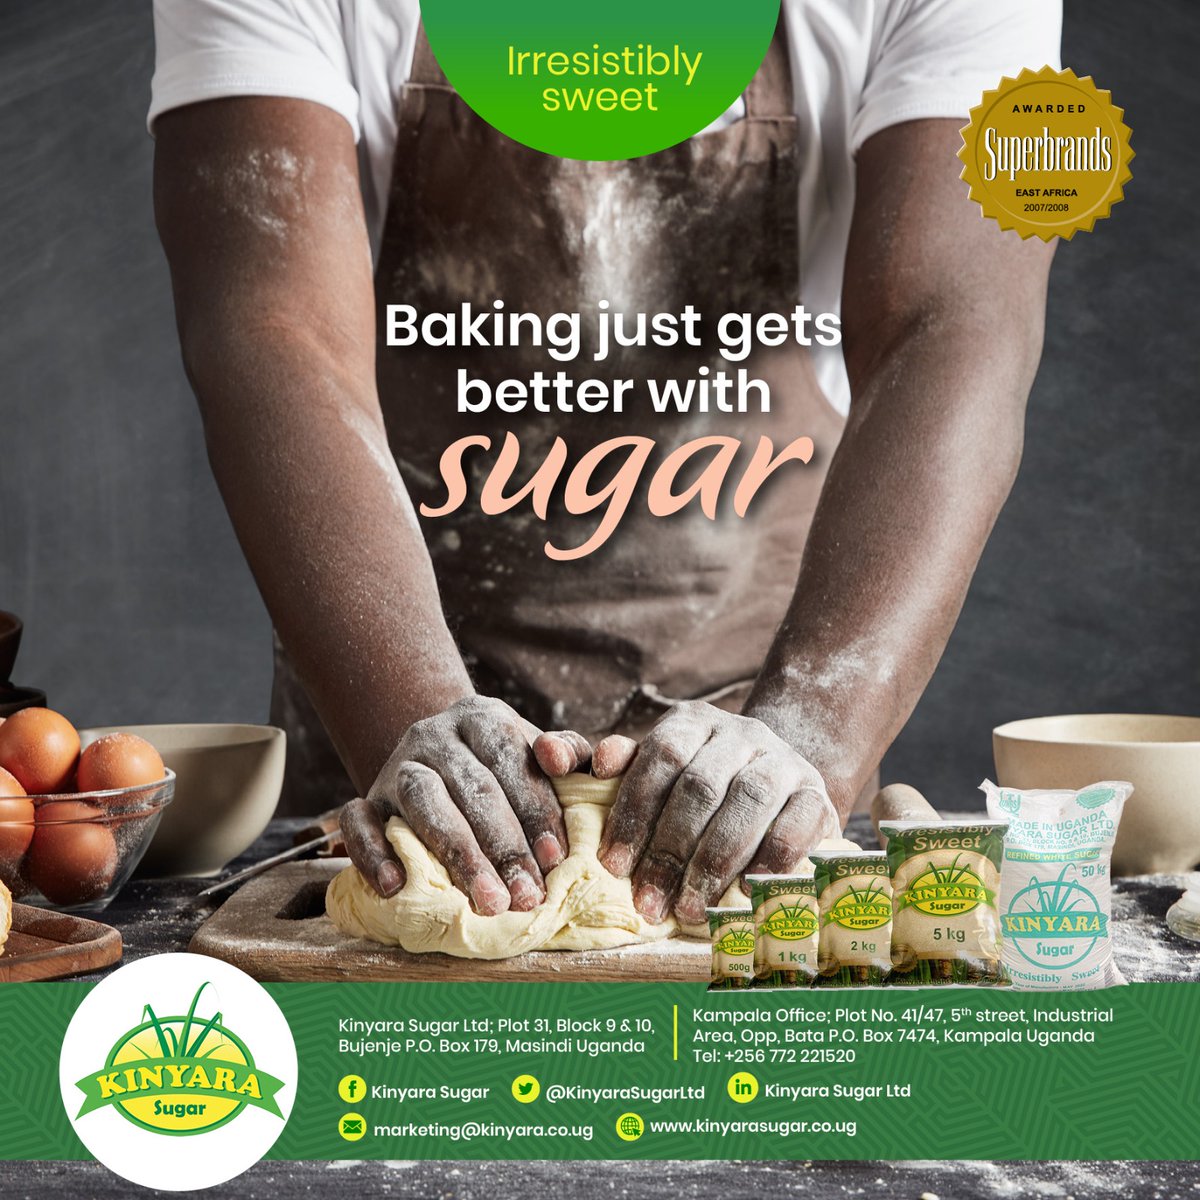 It's just fit for confectioners to use. Kinyara Sugar made in Masindi by @KinyaraSugarLtd is simply #IrresistiblySweet #WeAreKinyaraSugar #KinyaraSugarLtd